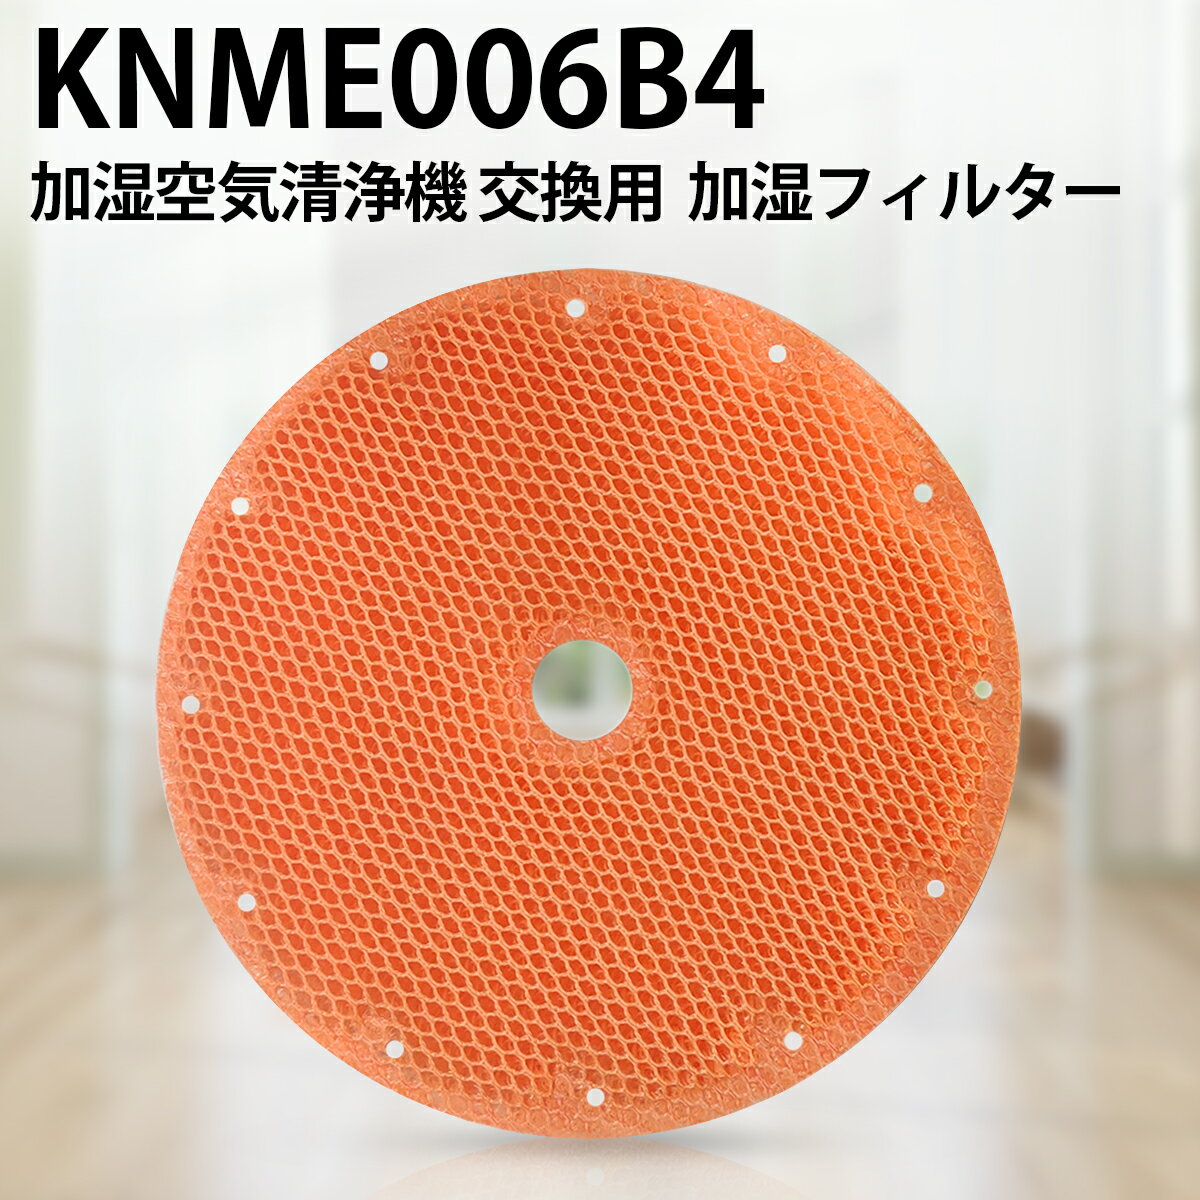 KNME006B4 加湿フィルター ダイキン加湿空気清浄機 フィルター knme006b4（KNME006A4の代替品番）「互換品/1枚入り」